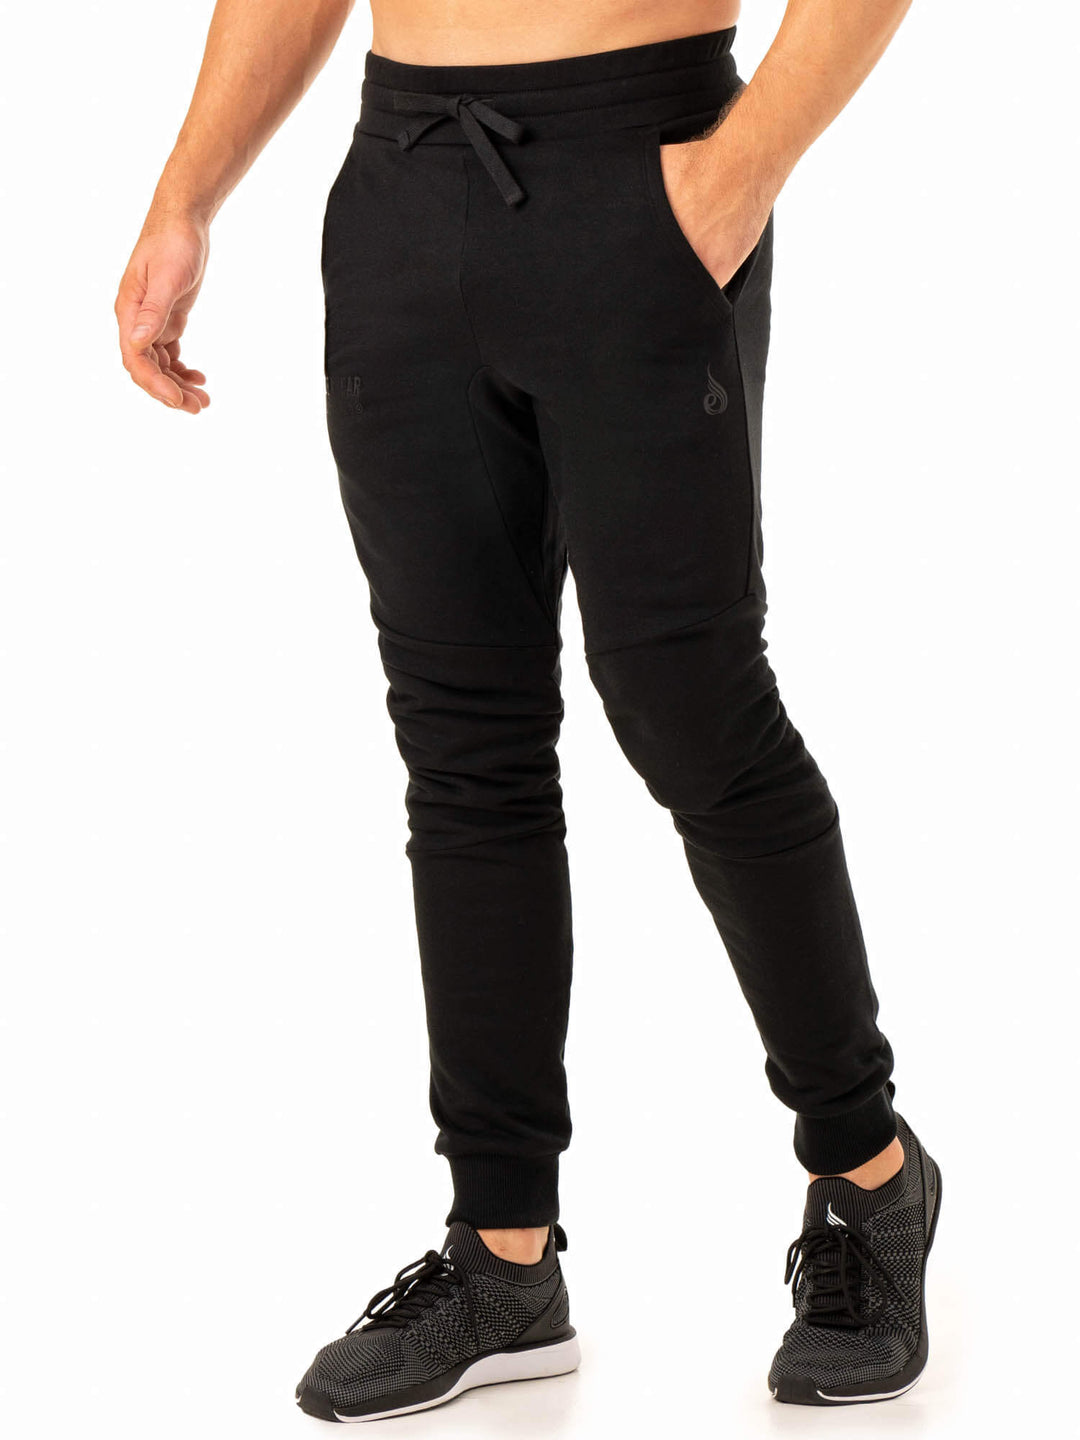 Limitless Track Pant - Black Clothing Ryderwear 